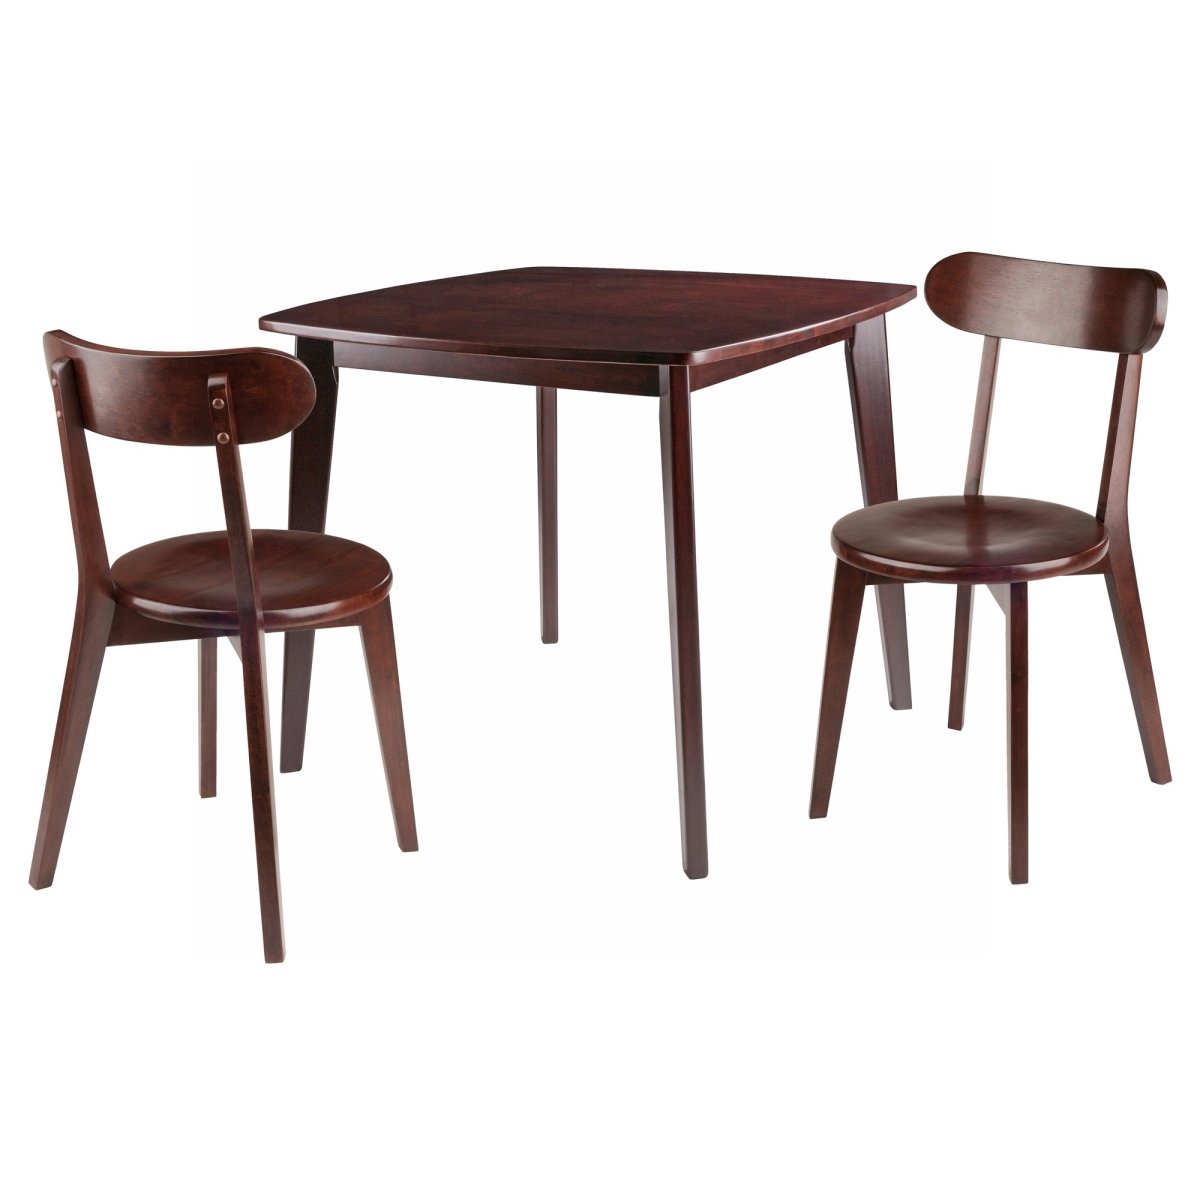 94333 Pauline Table Set With Chairs, Walnut - 3 Piece